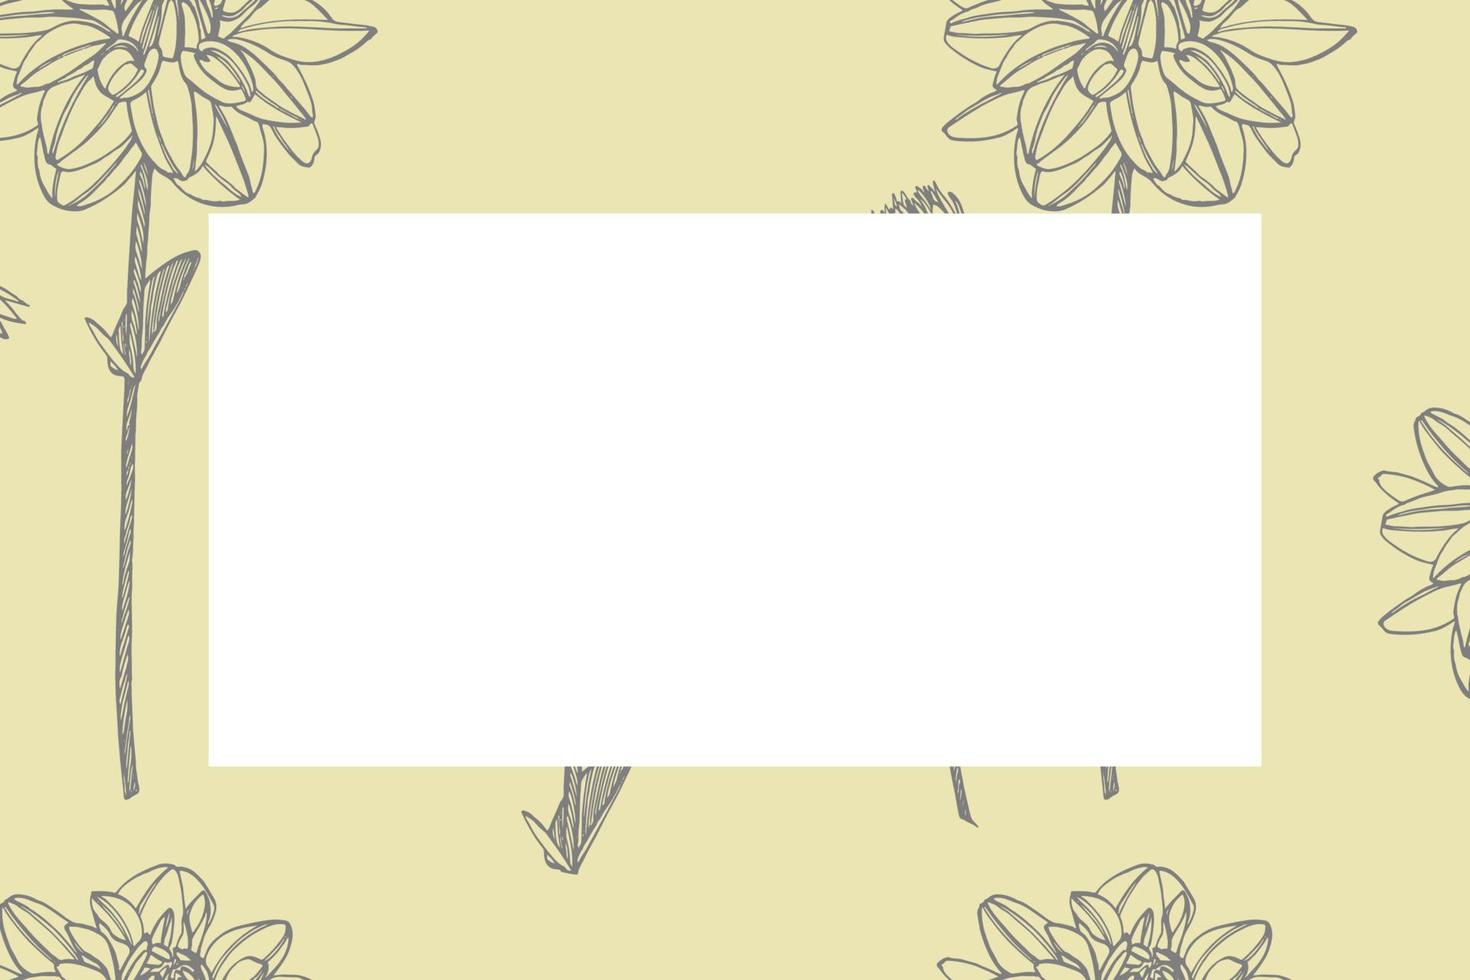 Hand-drawn ink dahlias. Floral elements. Graphic flowers illustrations. Botanical plant illustration. Vintage medicinal herbs sketch set of ink hand drawn medical herbs and plants sketch. vector